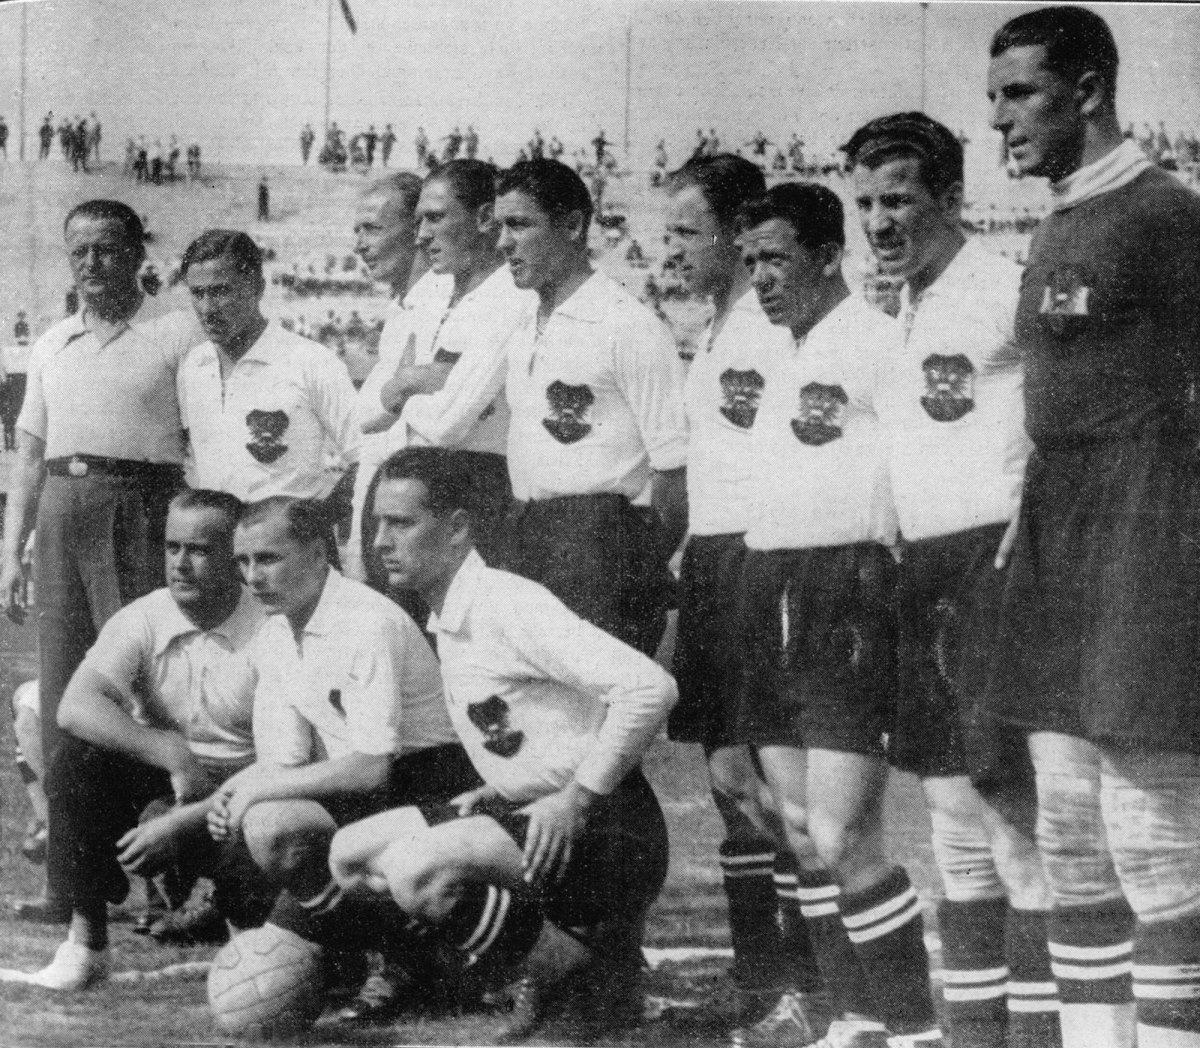 Austria's 1934 World Cup team